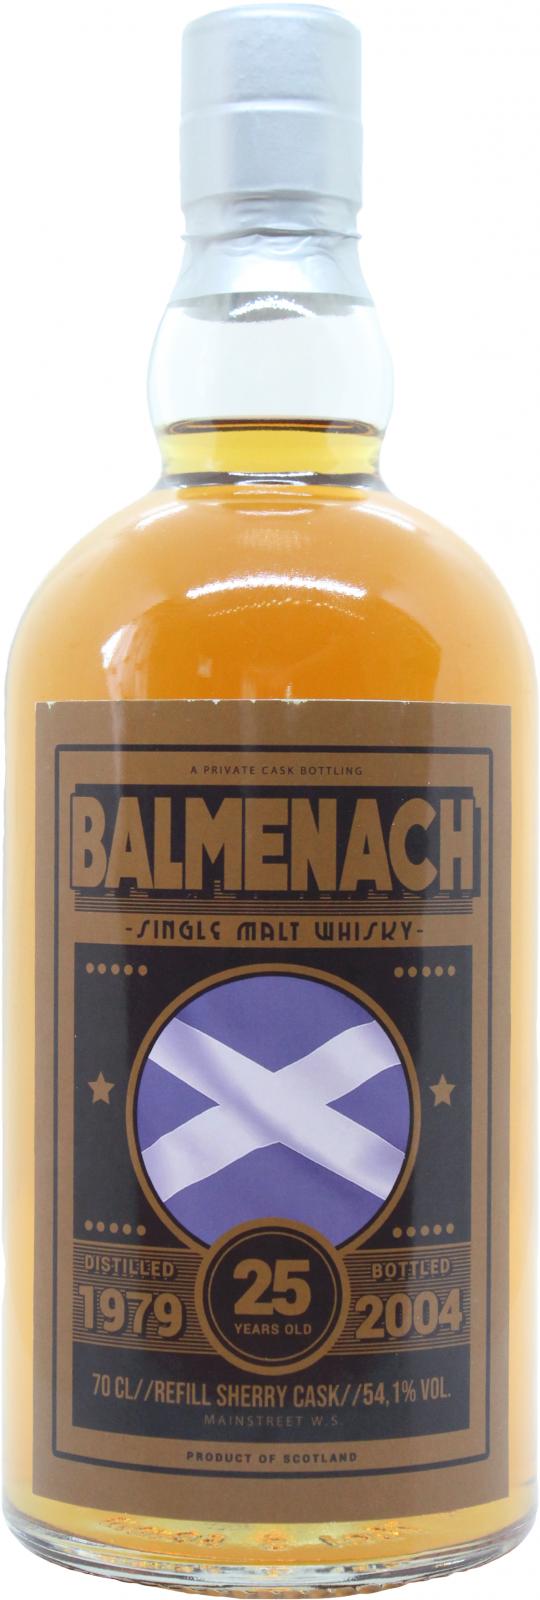 Balmenach 1979 UD Refill Sherry Cask Private Bottling 54.1% 700ml